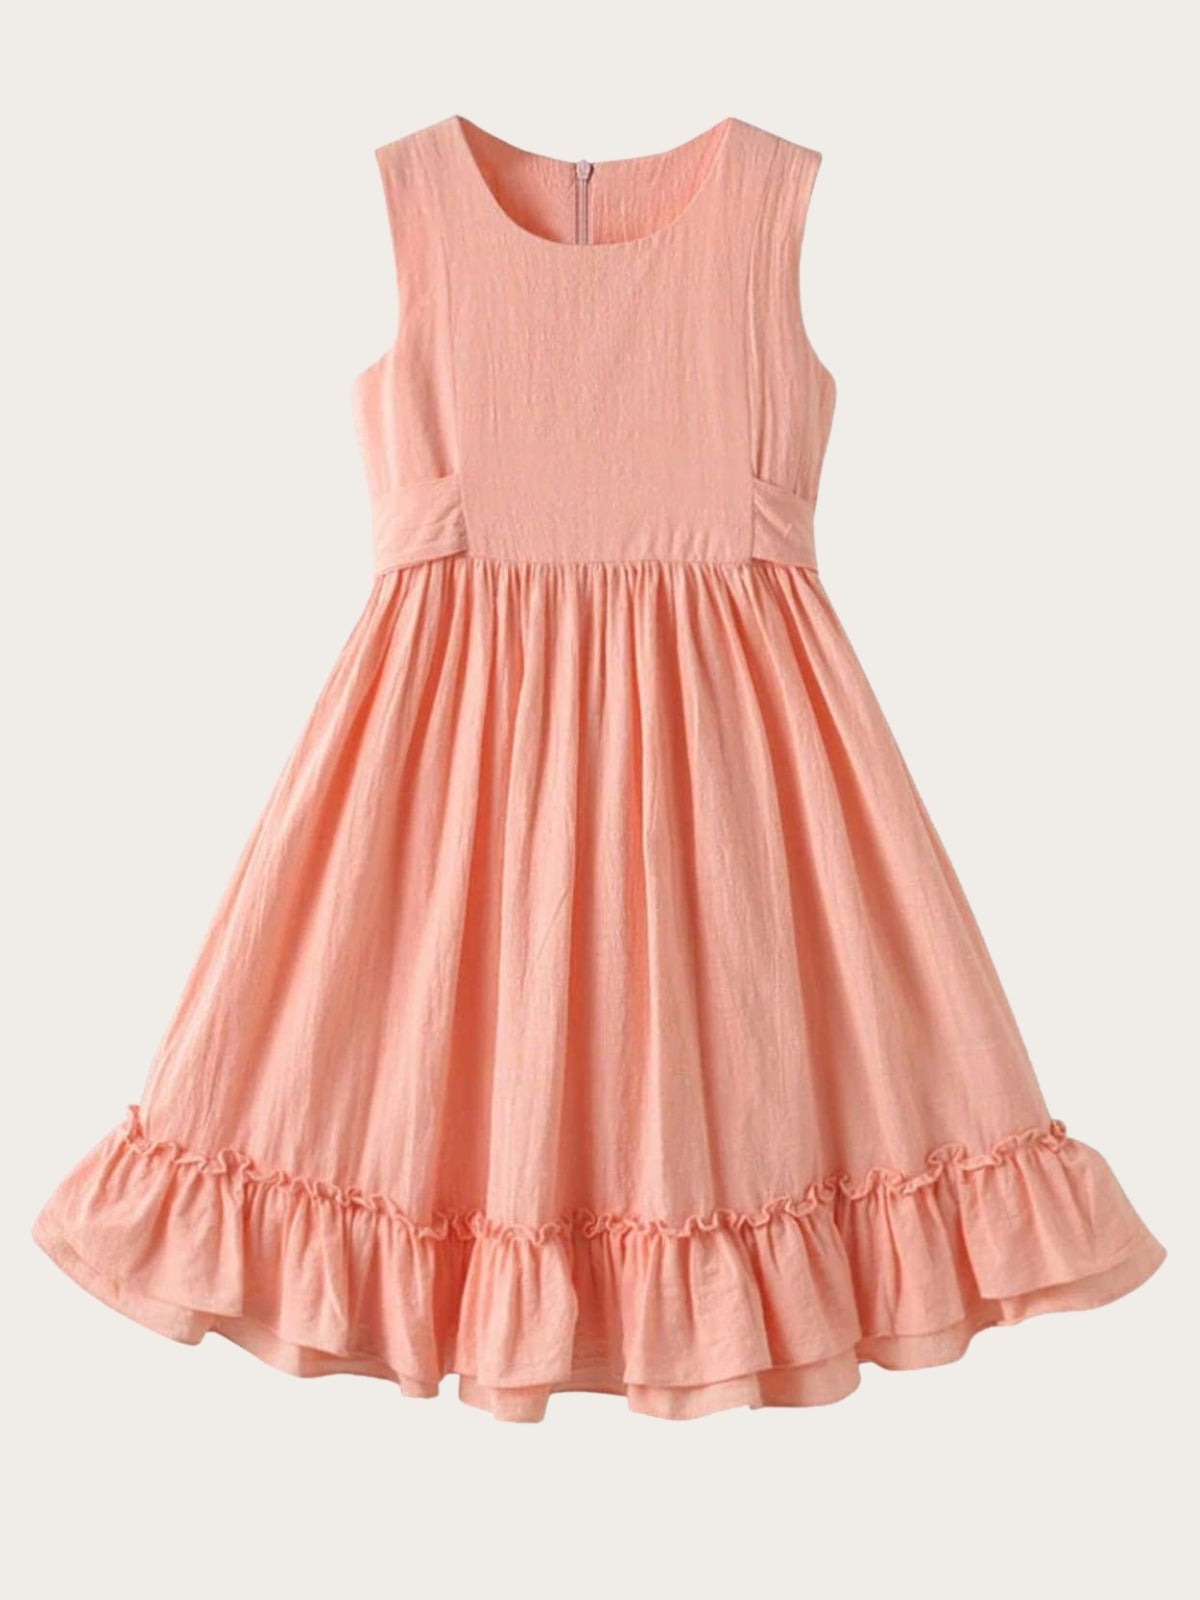 Toddler Spring Casual Dresses | Girls Pink Sleeveless Ruffle Sundress